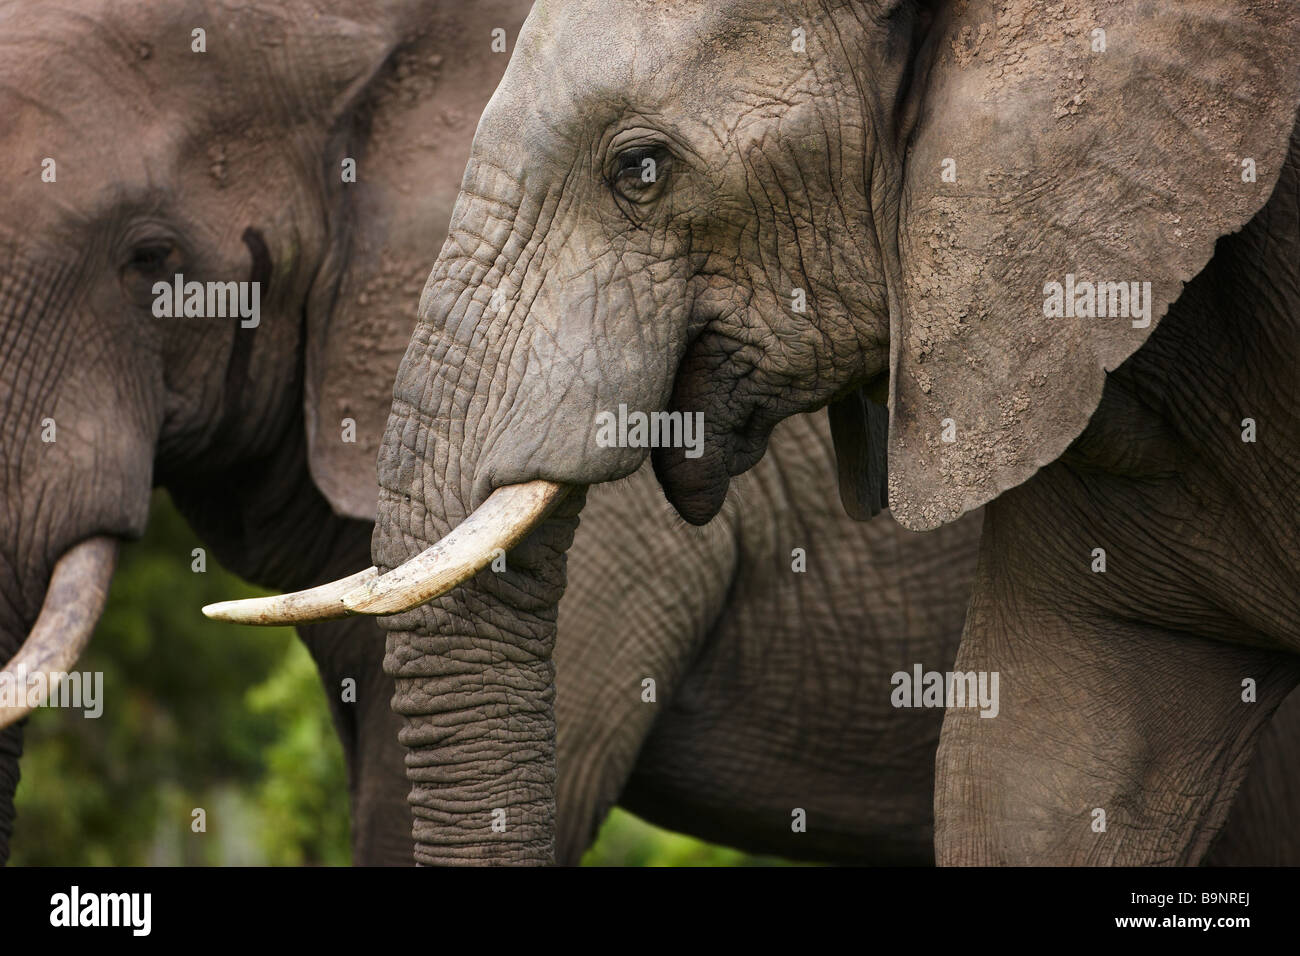 Ritratto di due elefanti africani nella boccola, Kruger National Park, Sud Africa Foto Stock